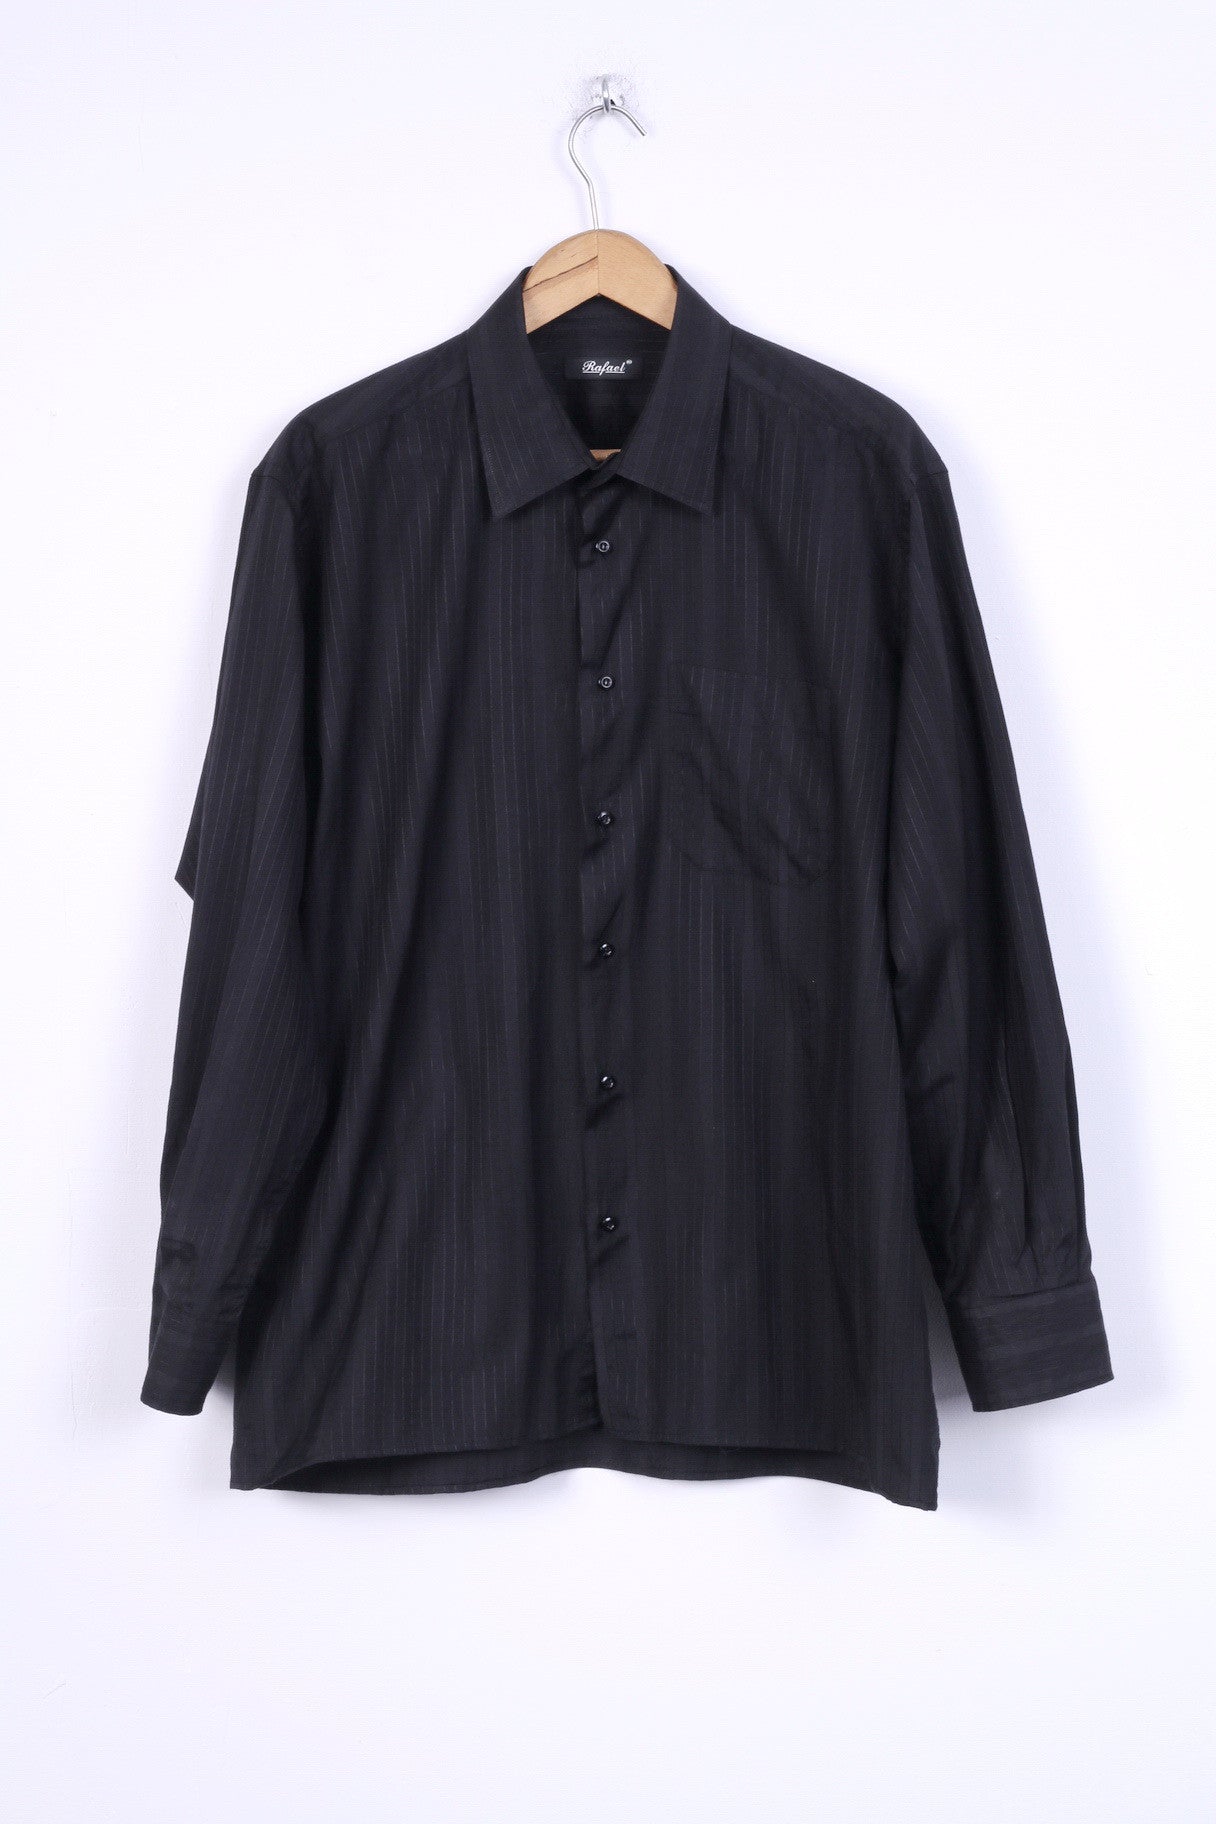 Rafael Mens 44 XL Casual Shirt Black Striped Cotton Long Sleeve